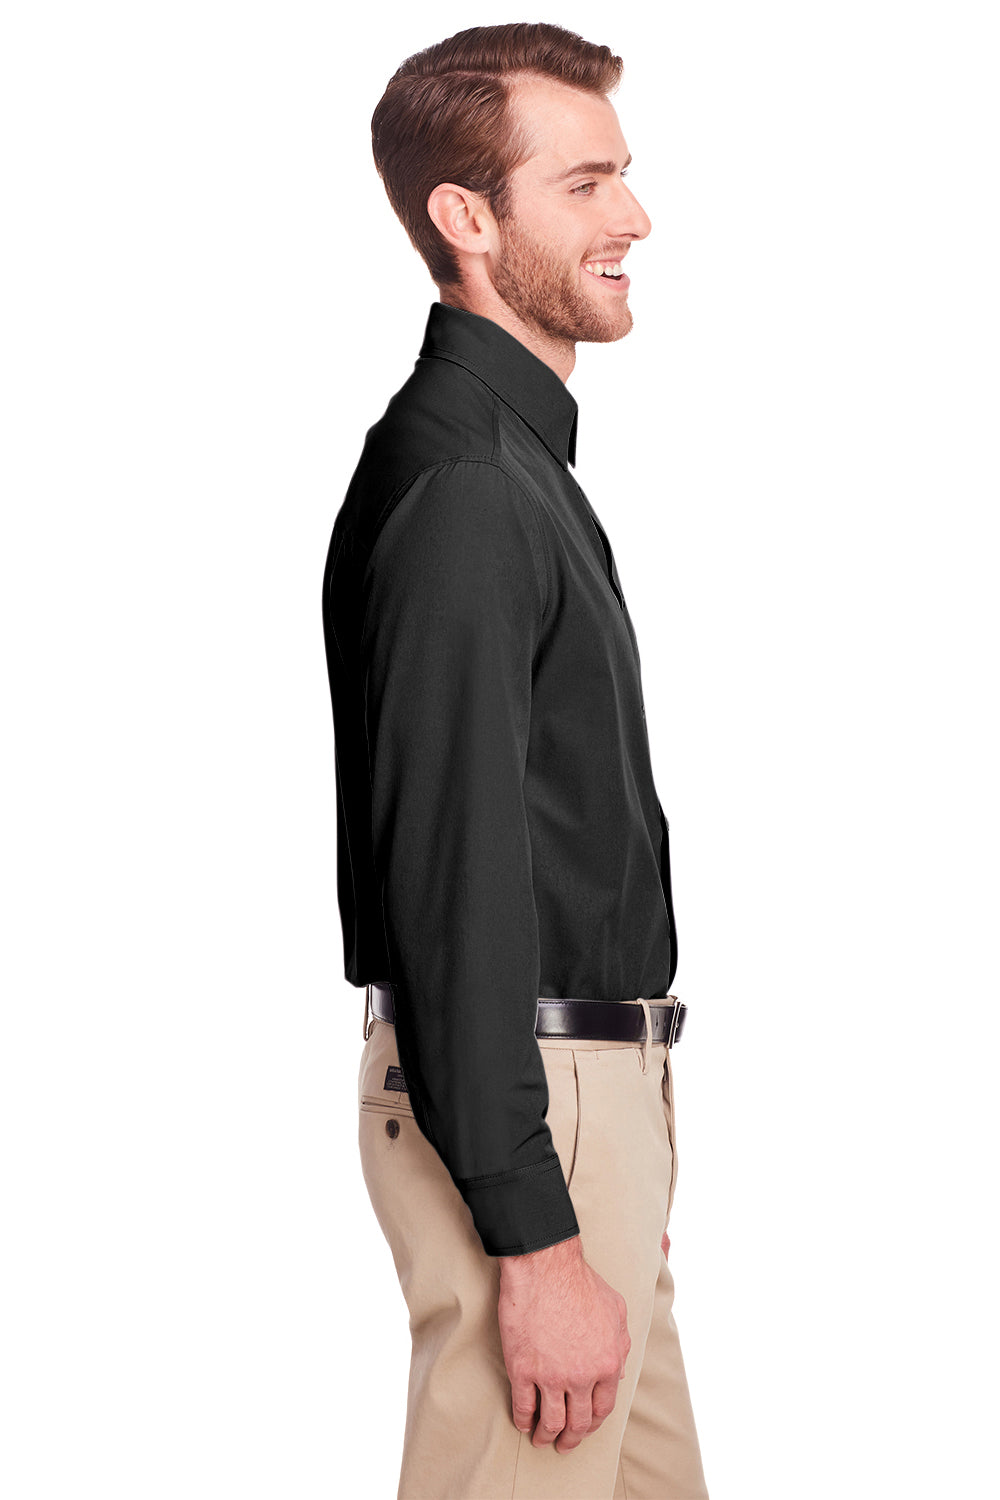 UltraClub UC500 Mens Bradley Performance Moisture Wicking Long Sleeve Button Down Shirt w/ Pocket Black Side